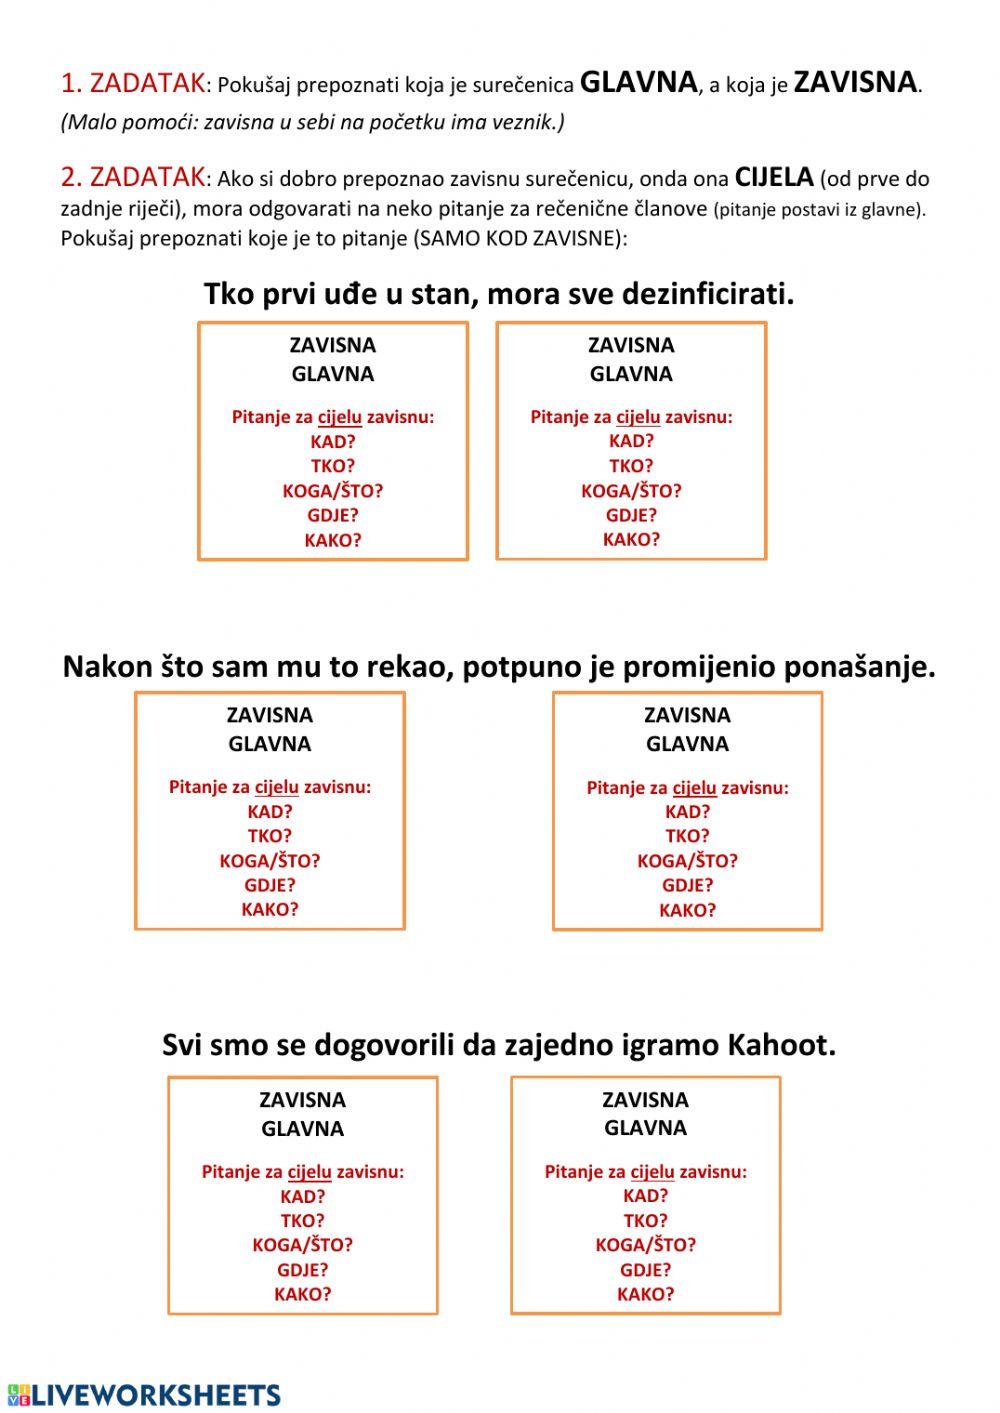 Hrvatski jezik